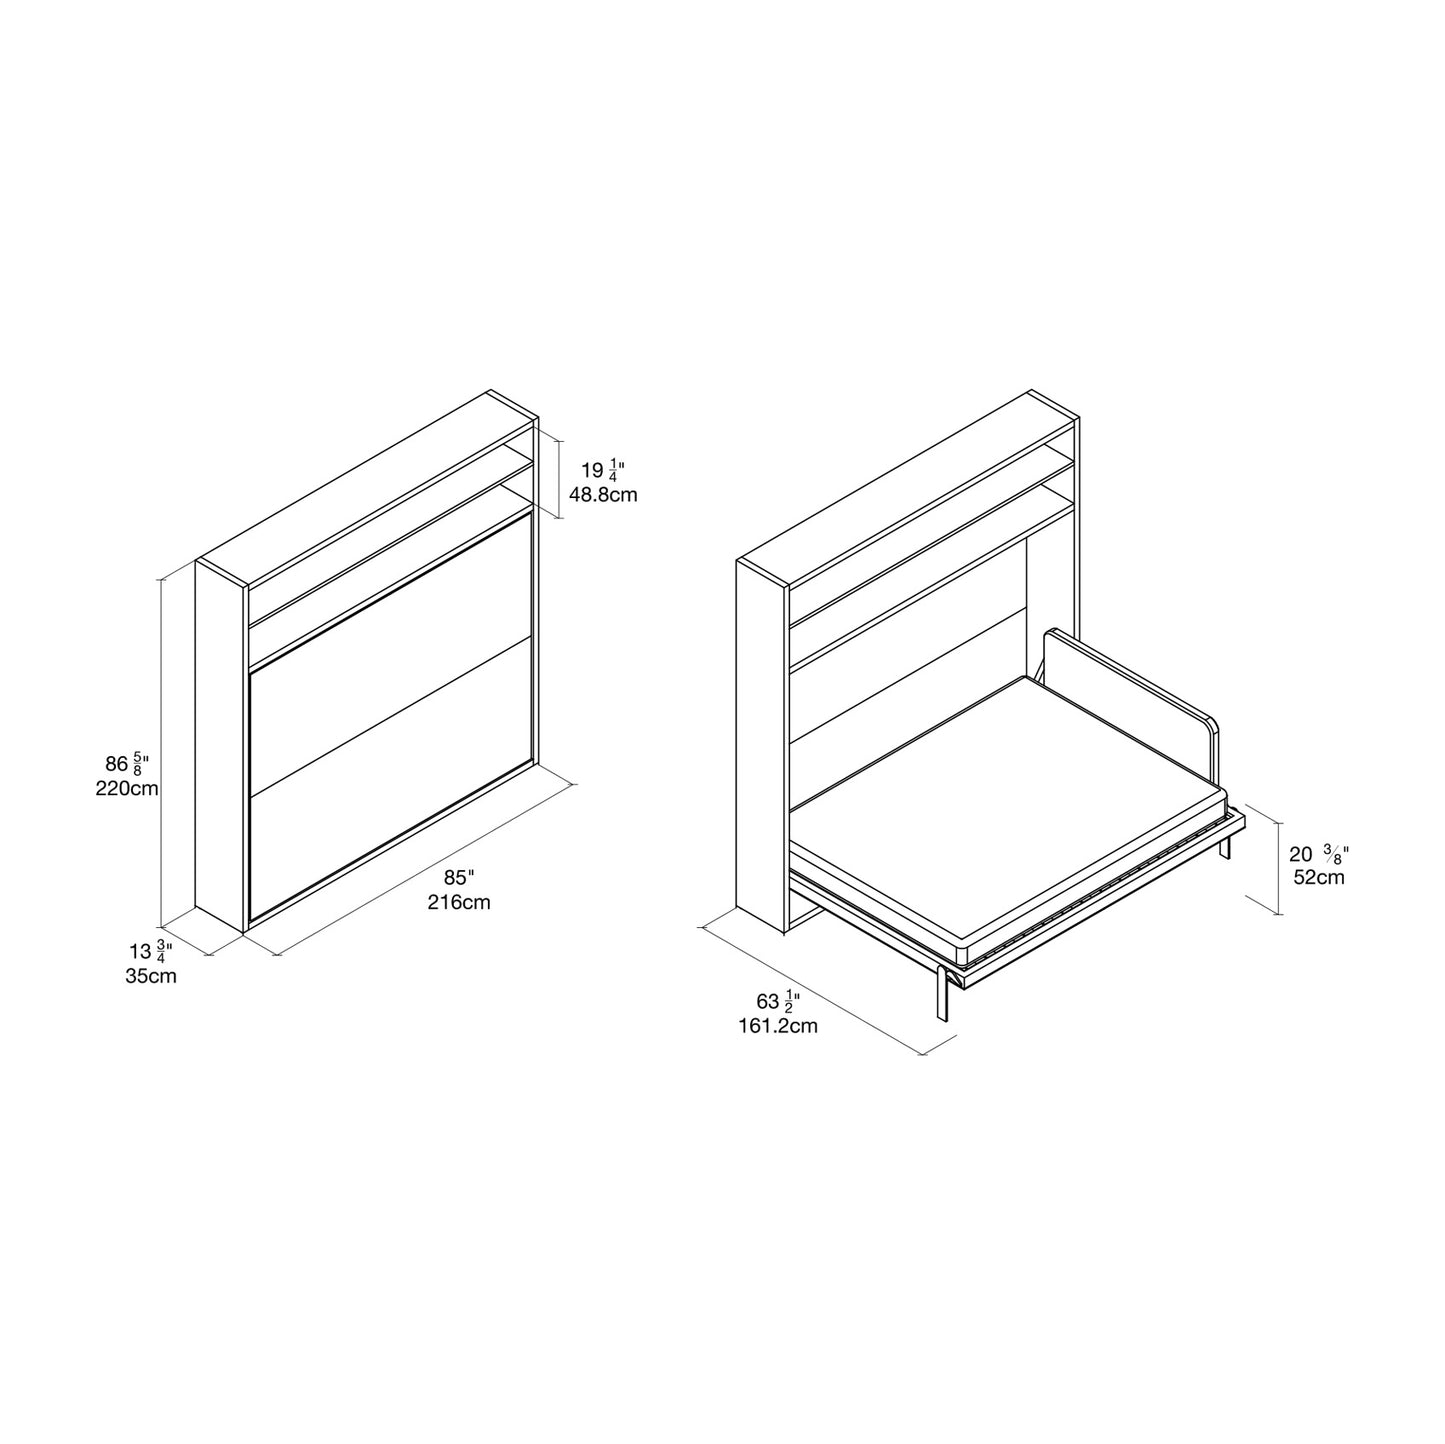 CLEI Circe horizontal plain wall bed dimensions